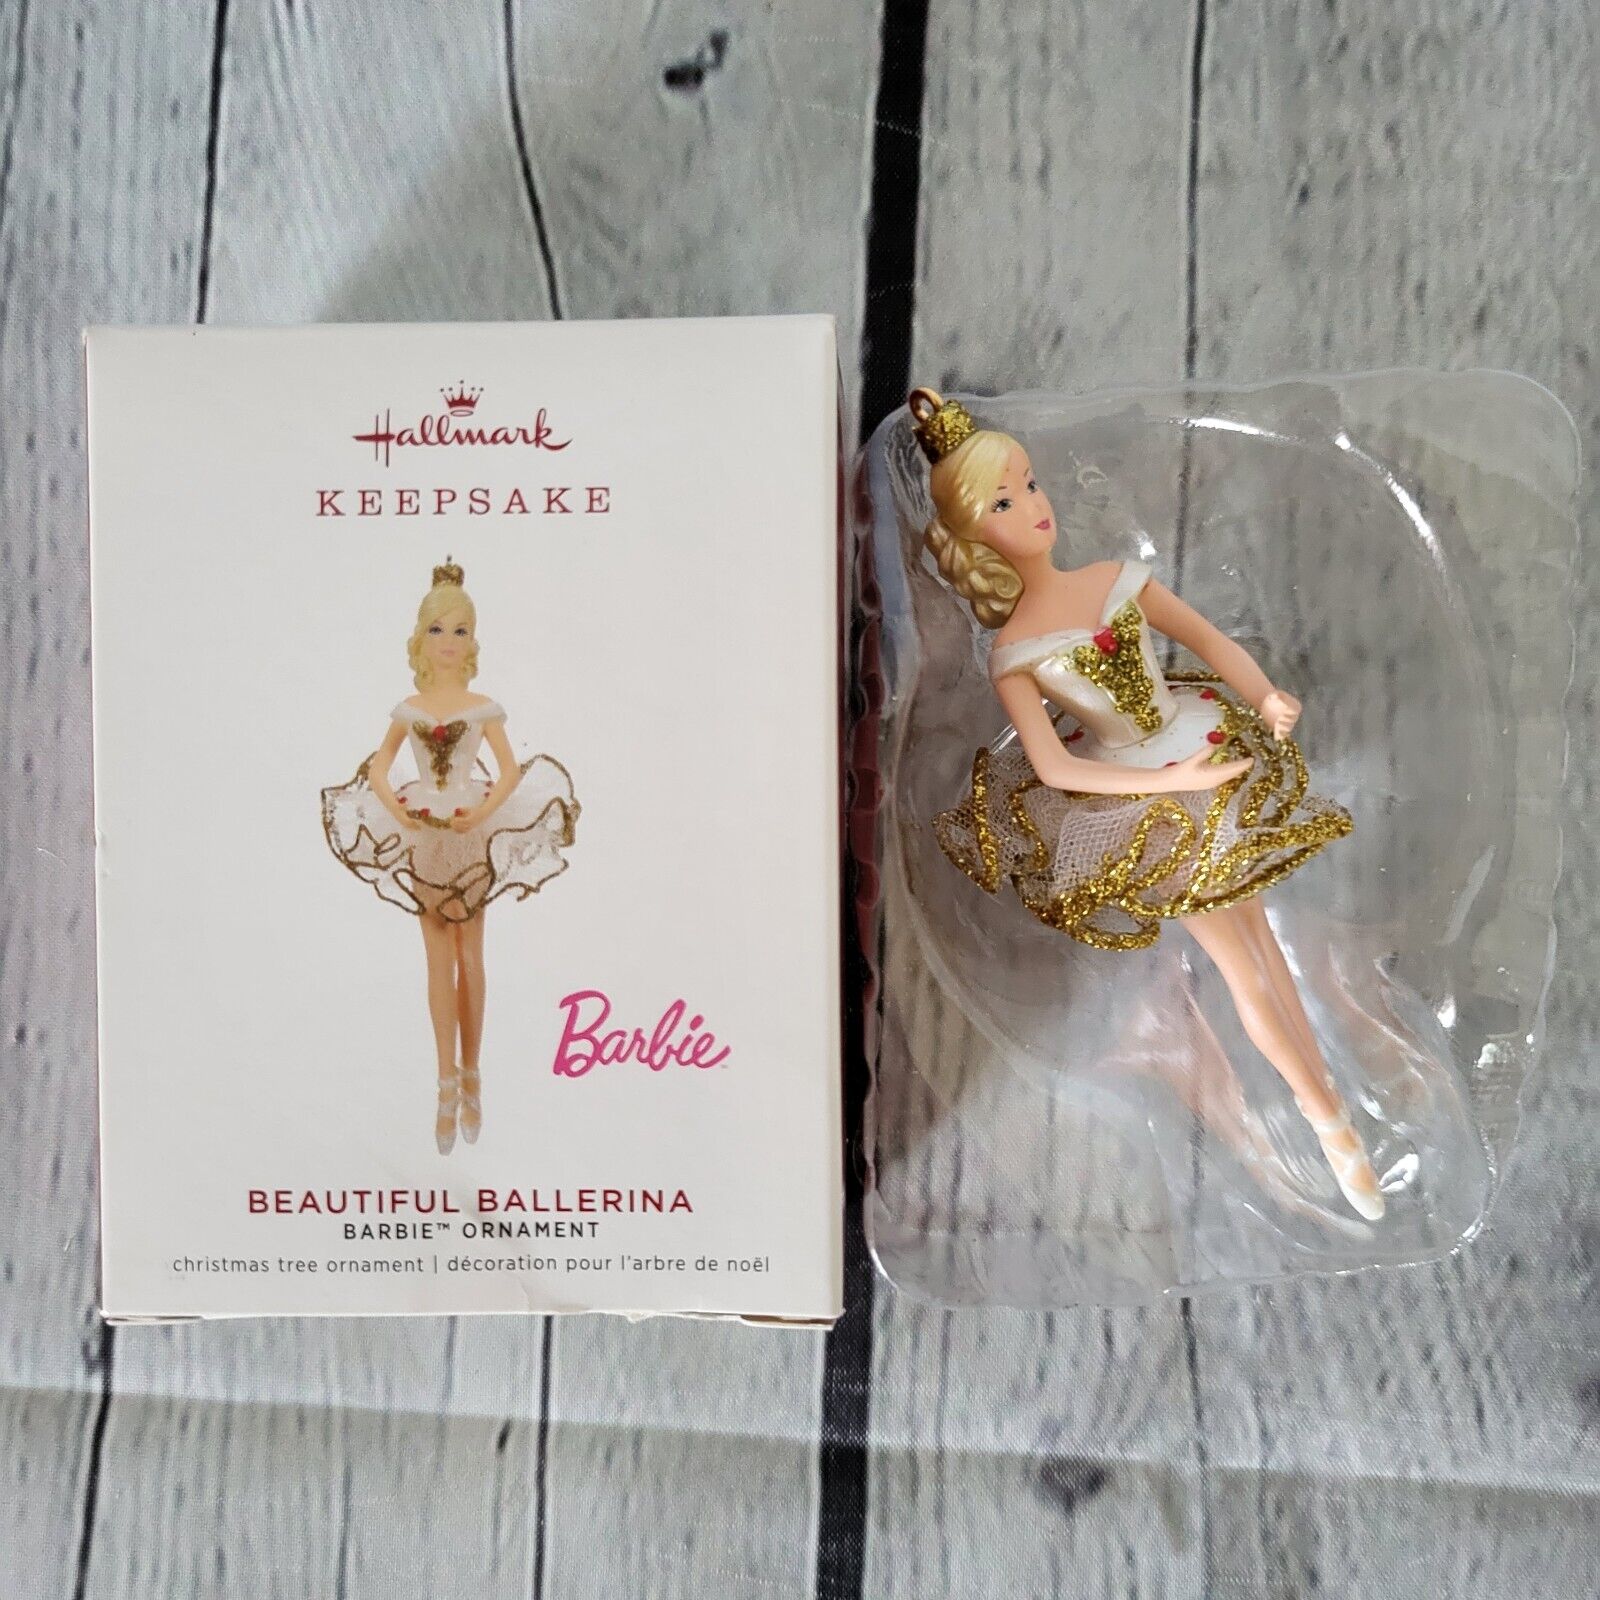 2019 Hallmark Keepsake Ornament Beautiful Ballerina Barbie